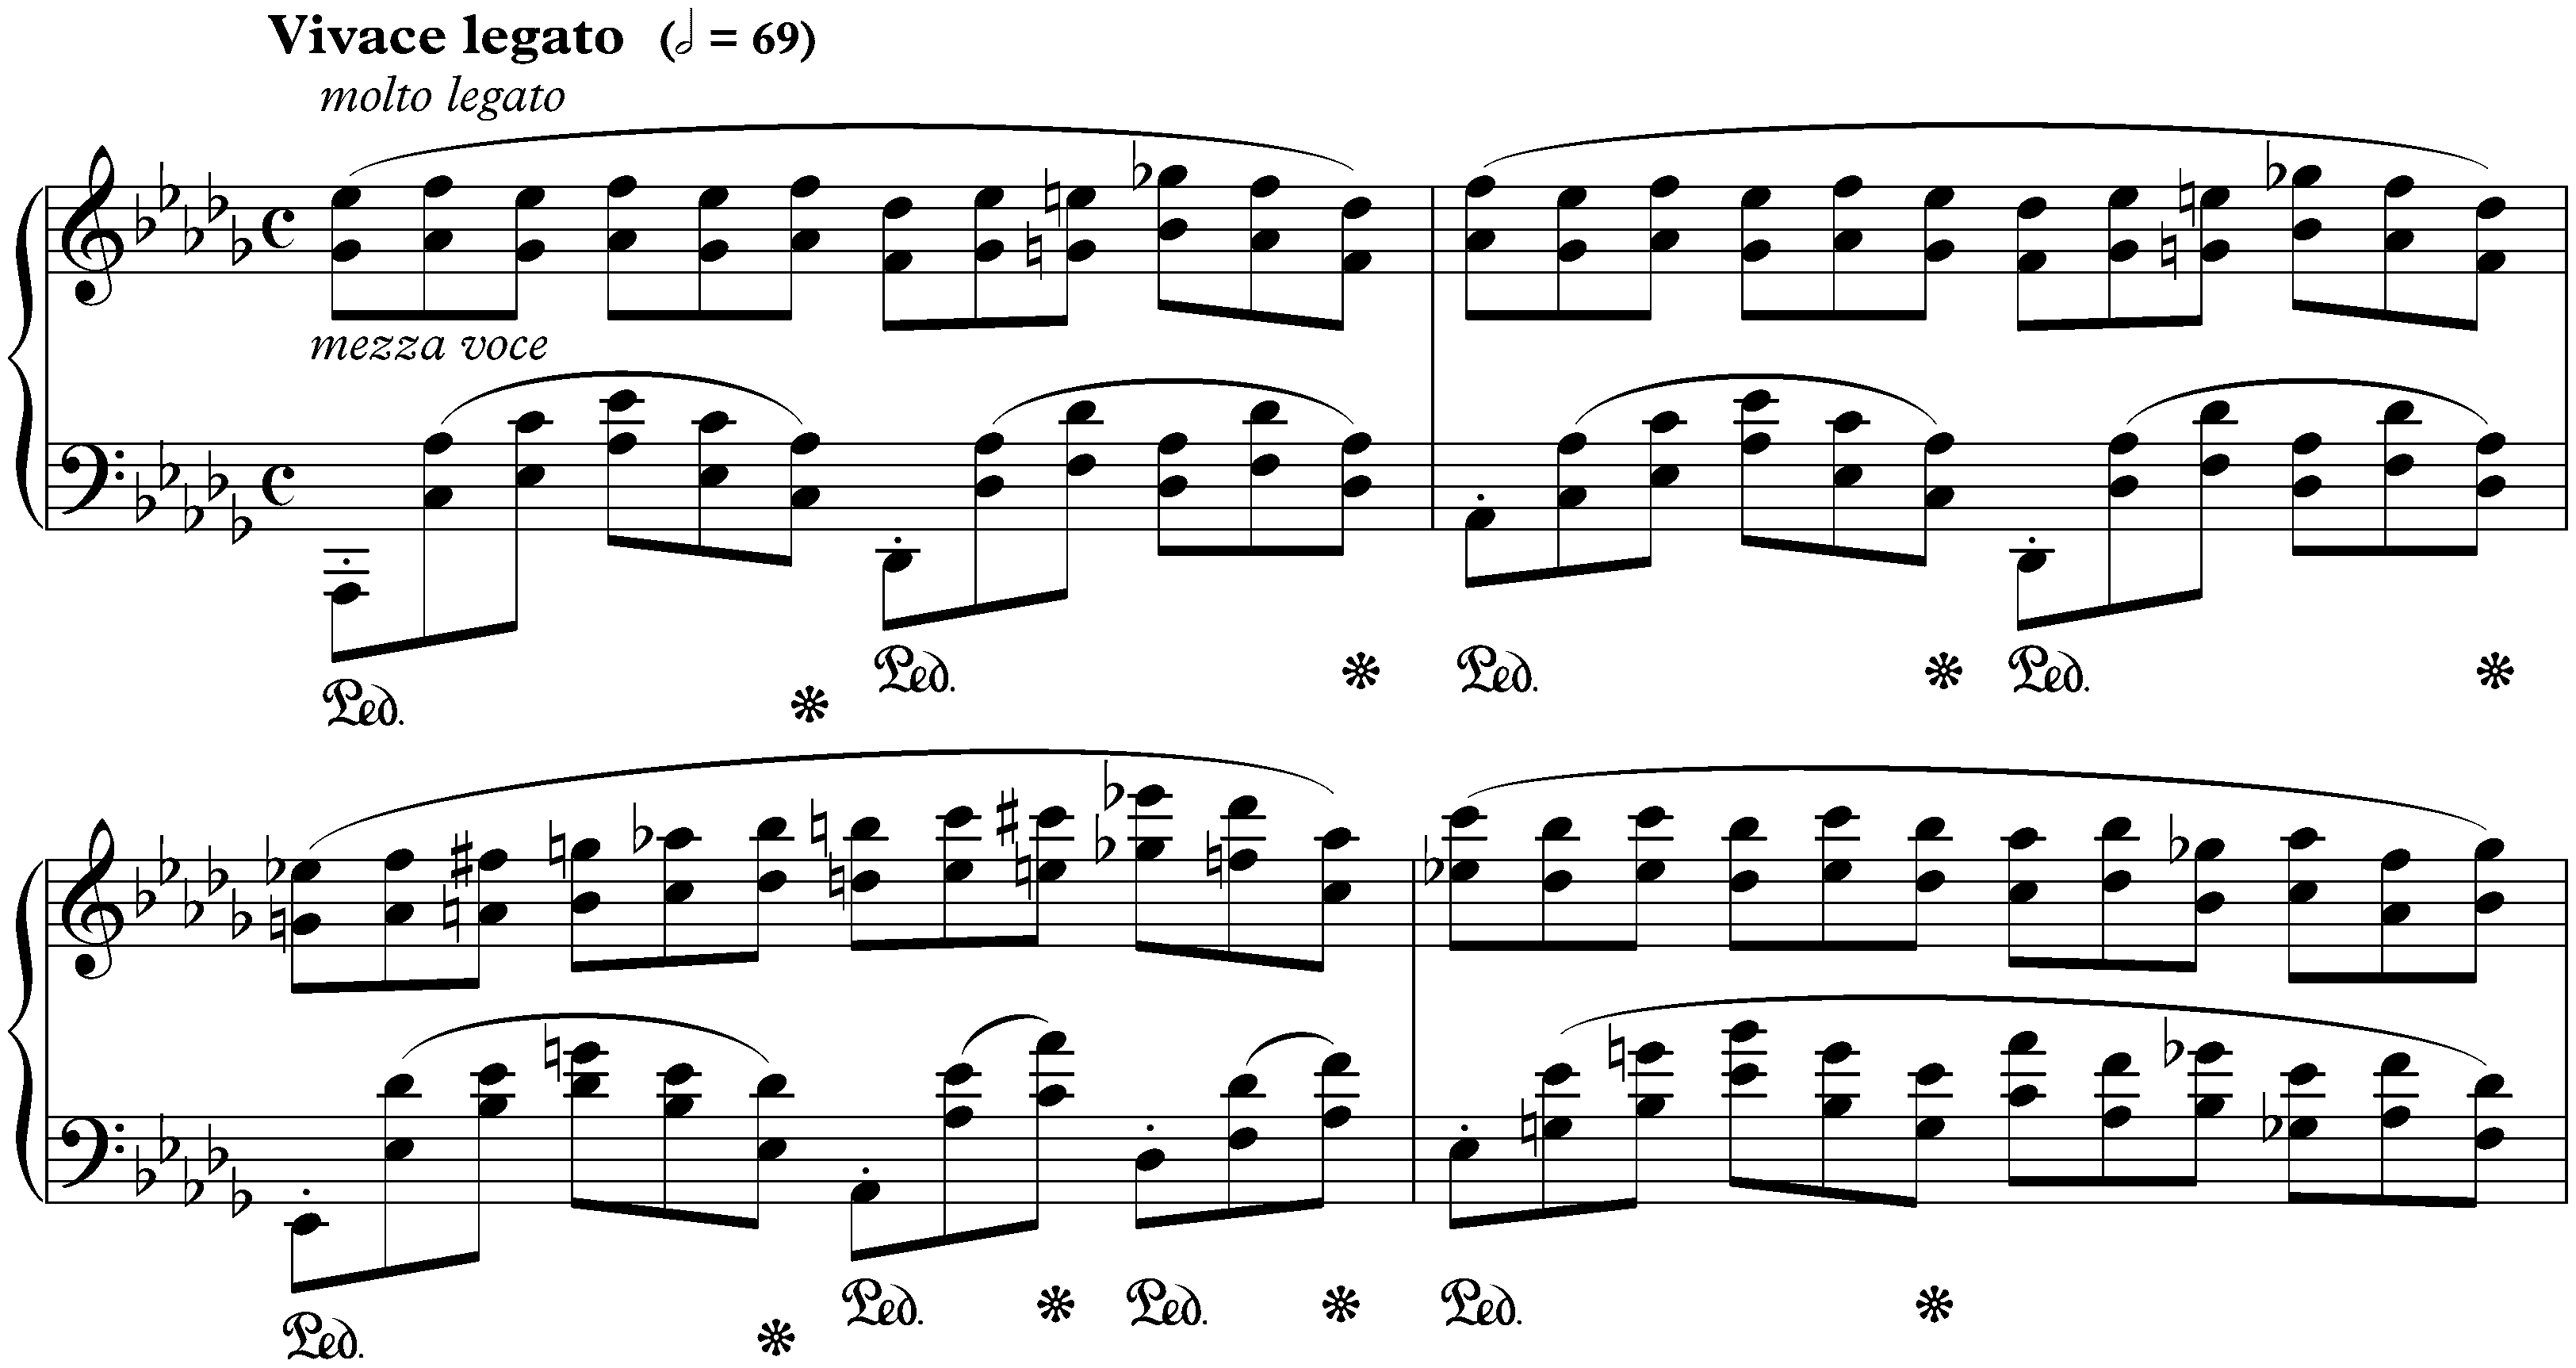 Twelve Études, op. 25; 8. D-flat major